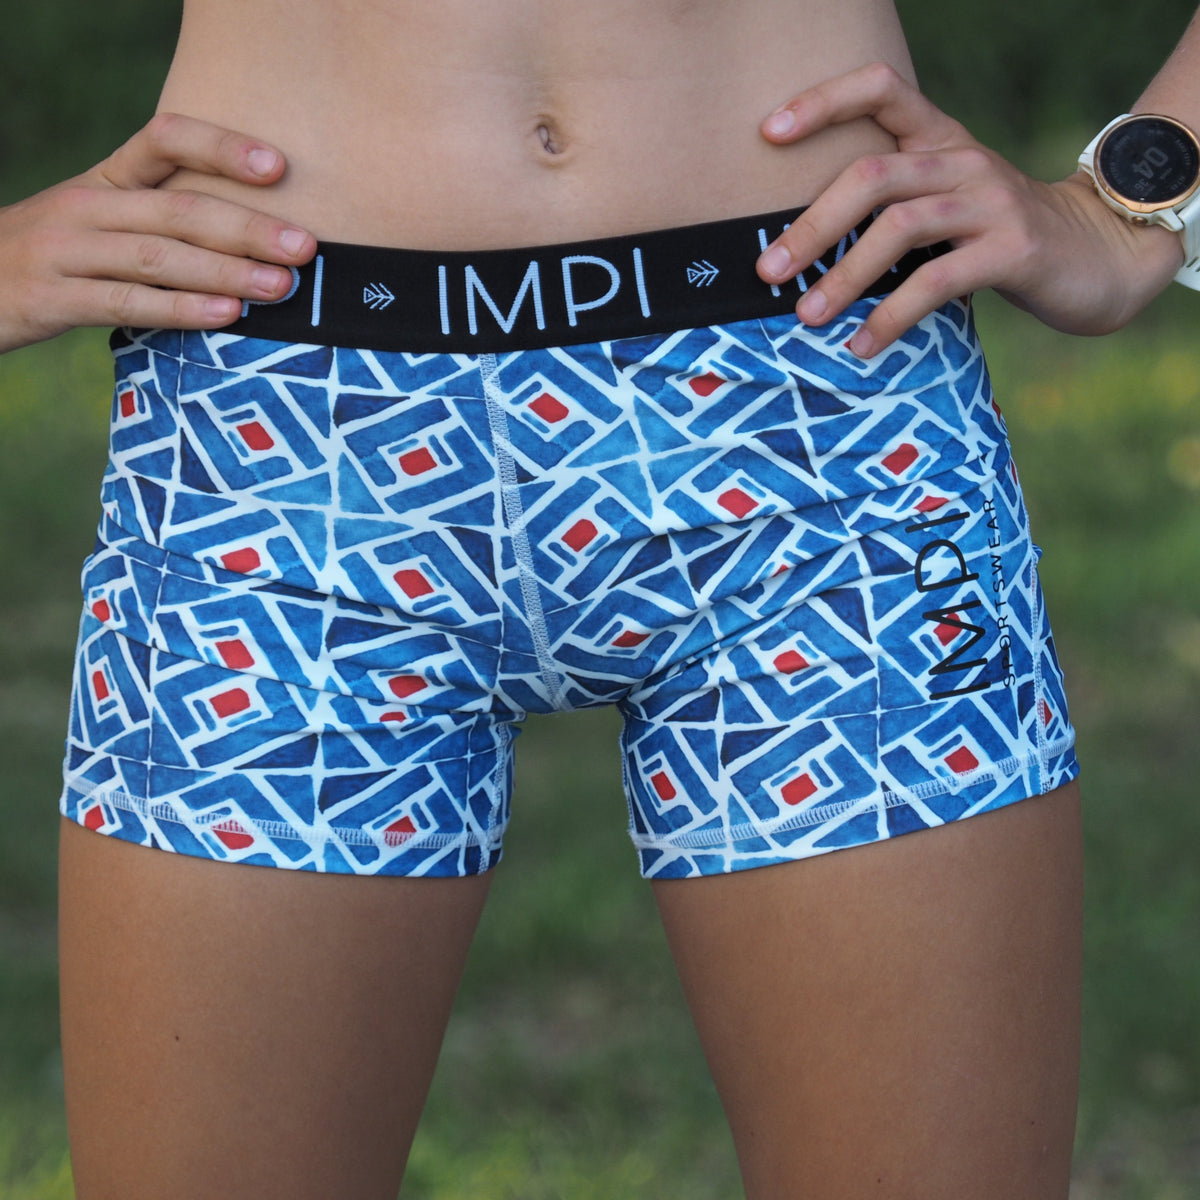 impi running shorts